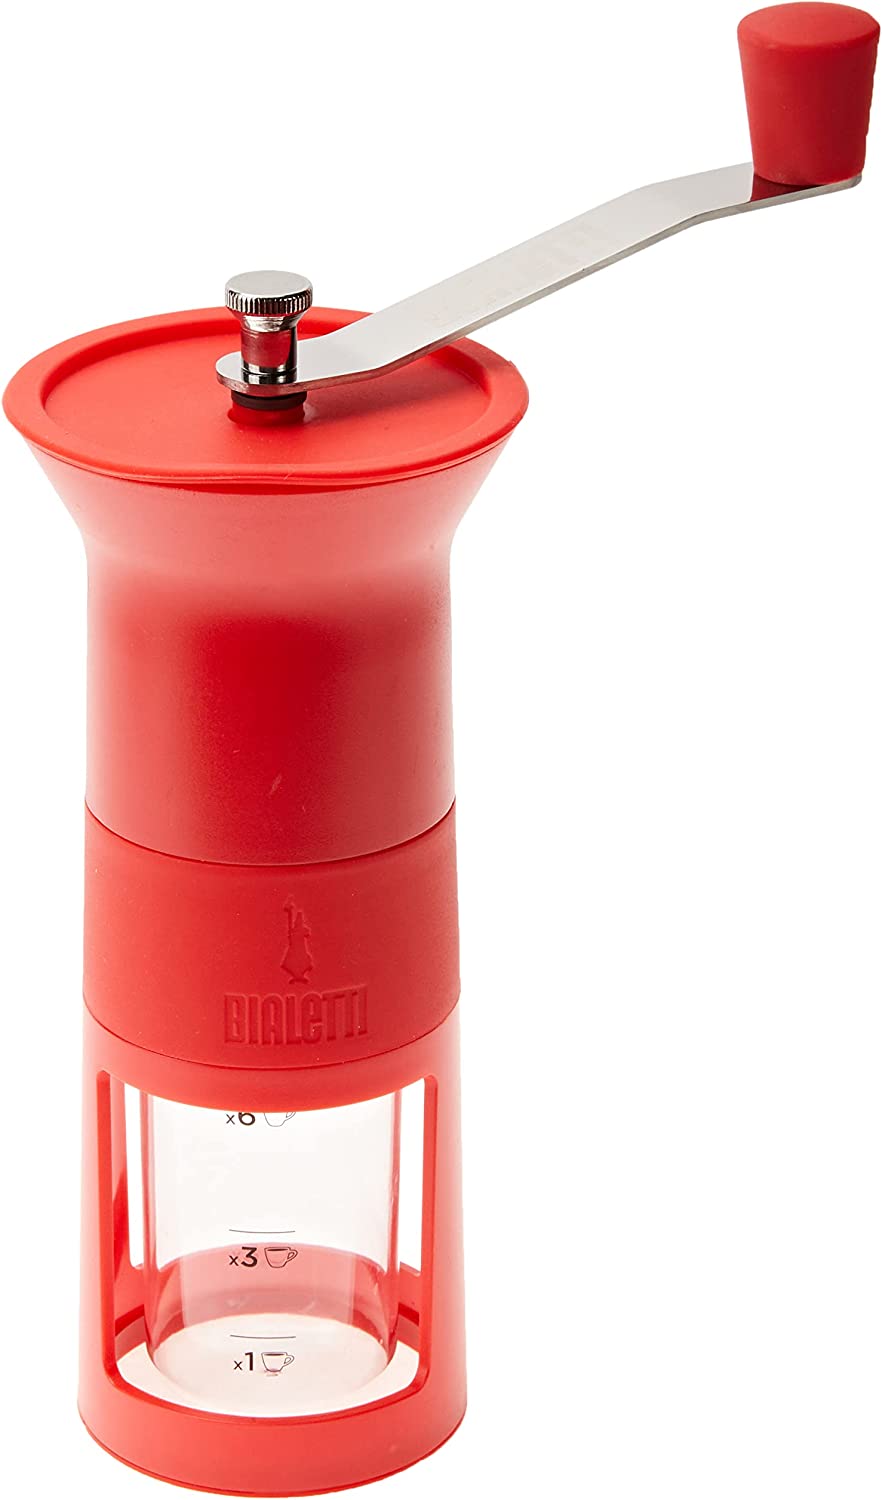 Bialetti DCDESIGN02 Plastic Funnel, Red, 11.5 x 8.5 x 21.5 cm